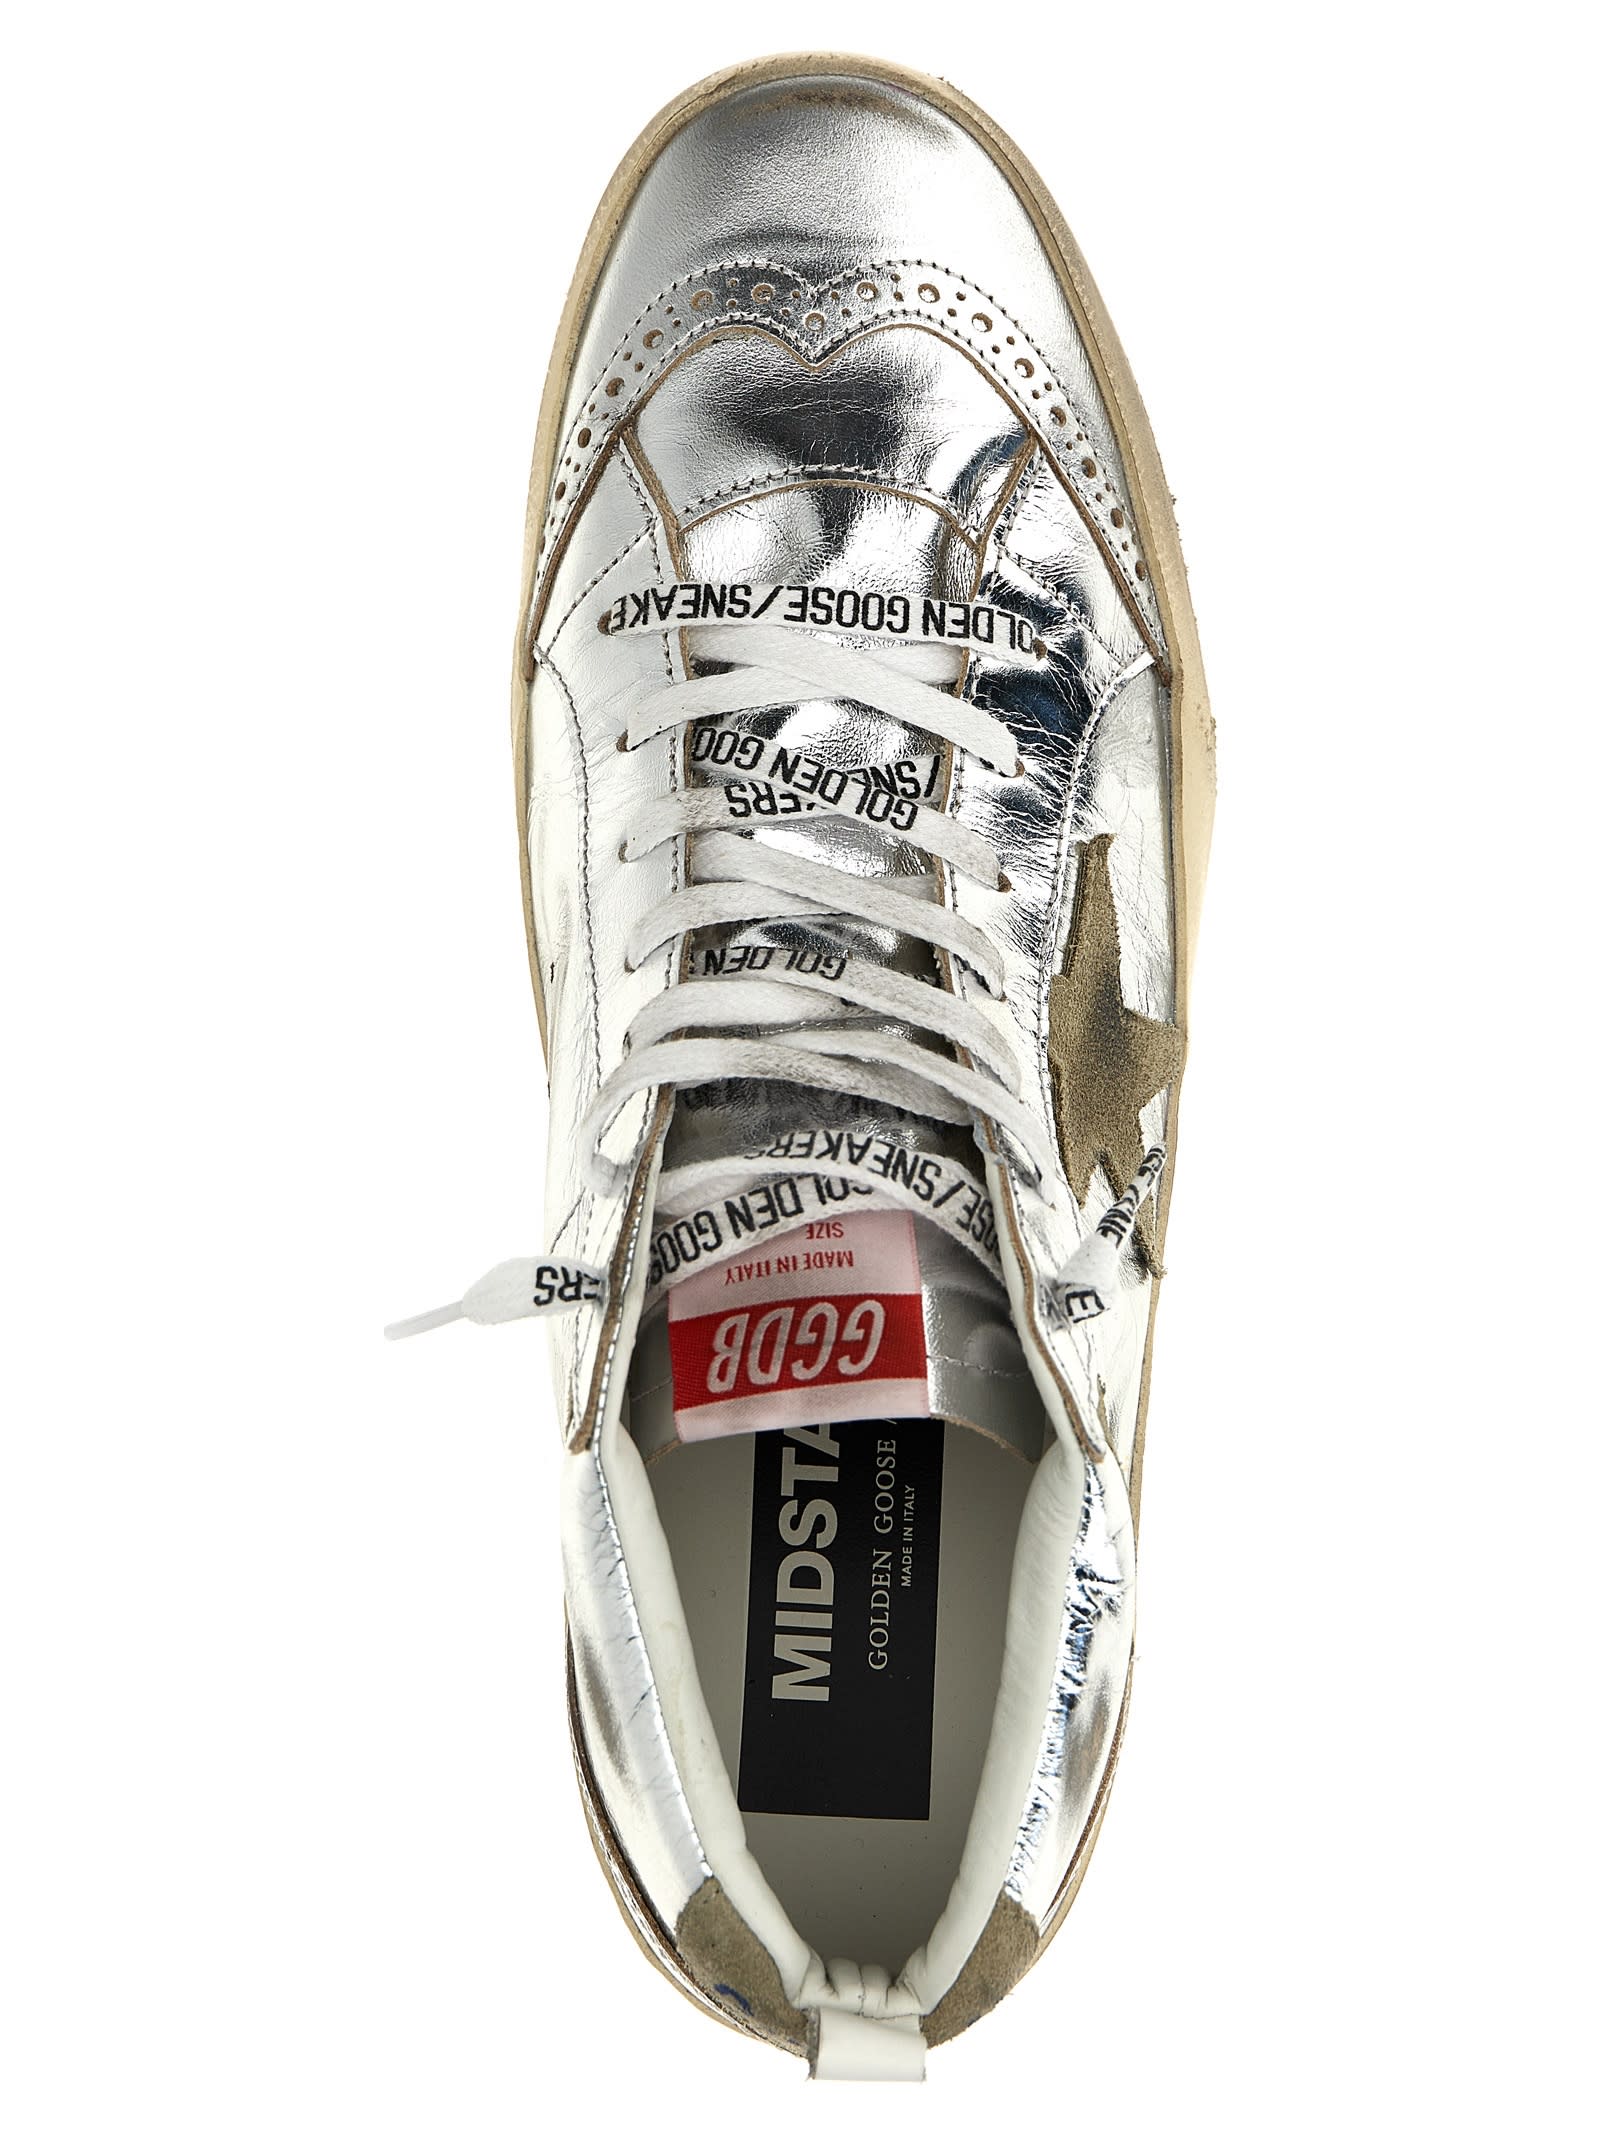 Shop Golden Goose Mid Star Sneaker In Silver